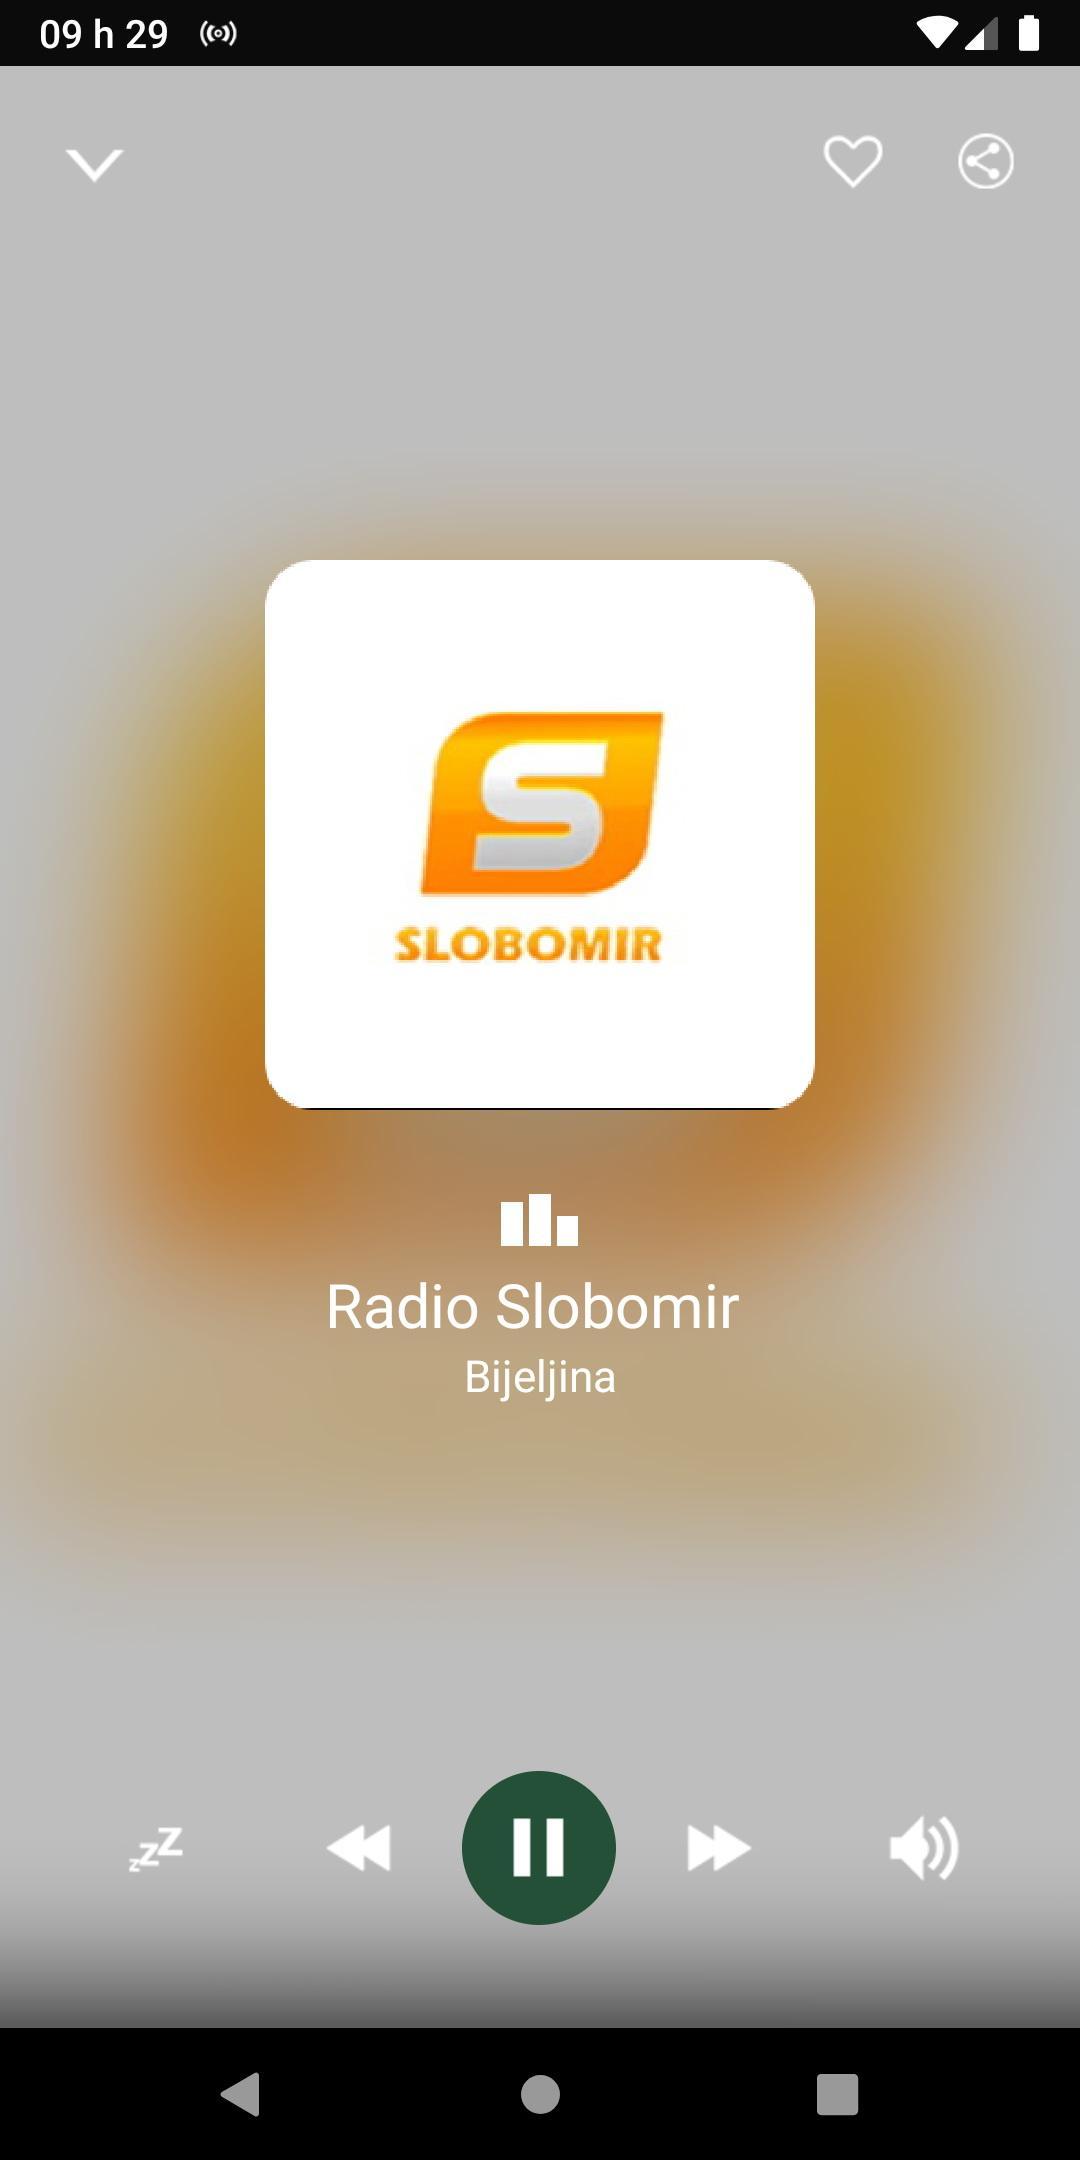 Bosna i Hercegovina Radio Stanice for Android - APK Download